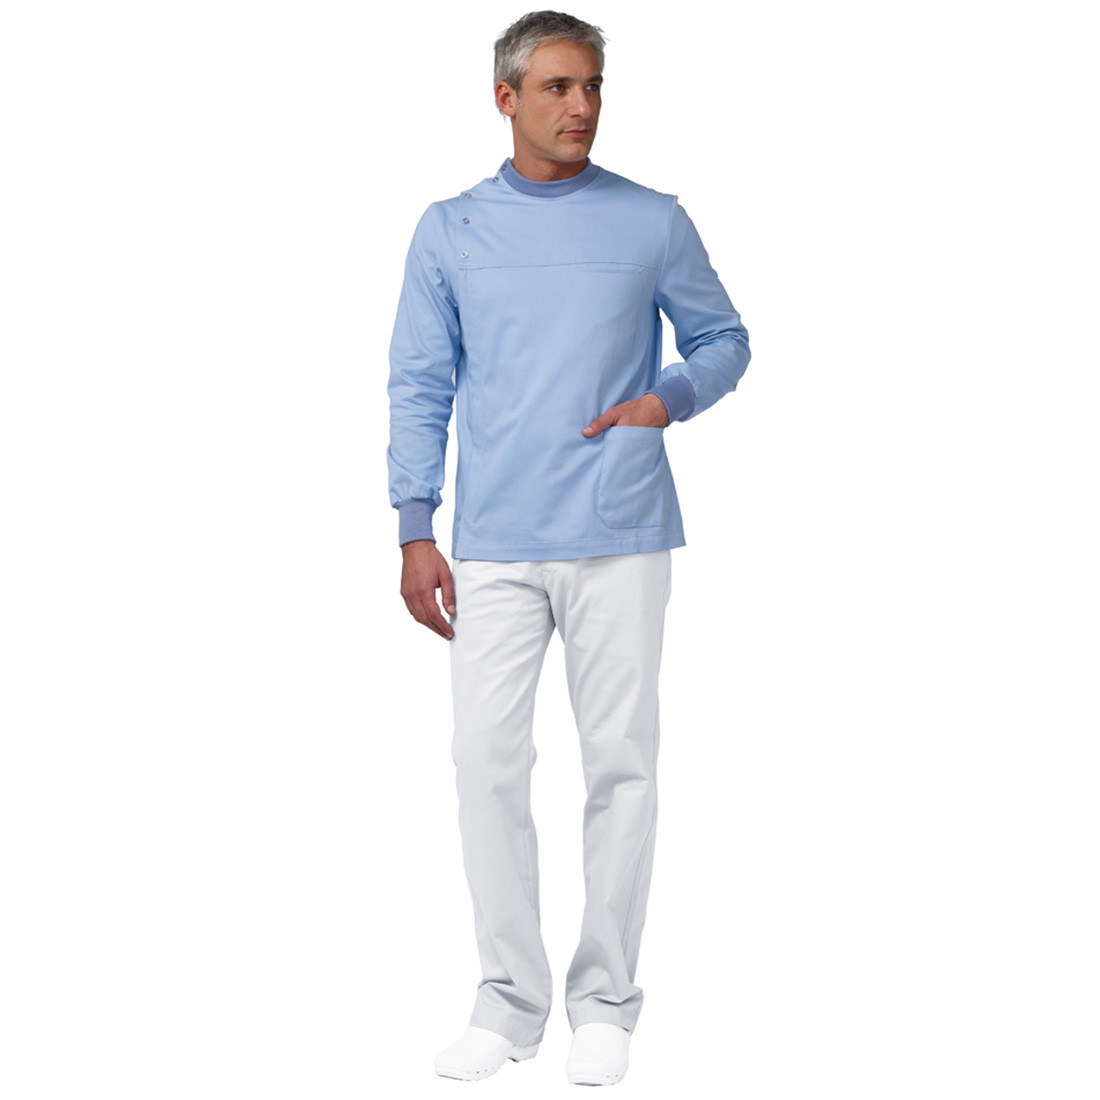 JASON medical tunic - Safetywear